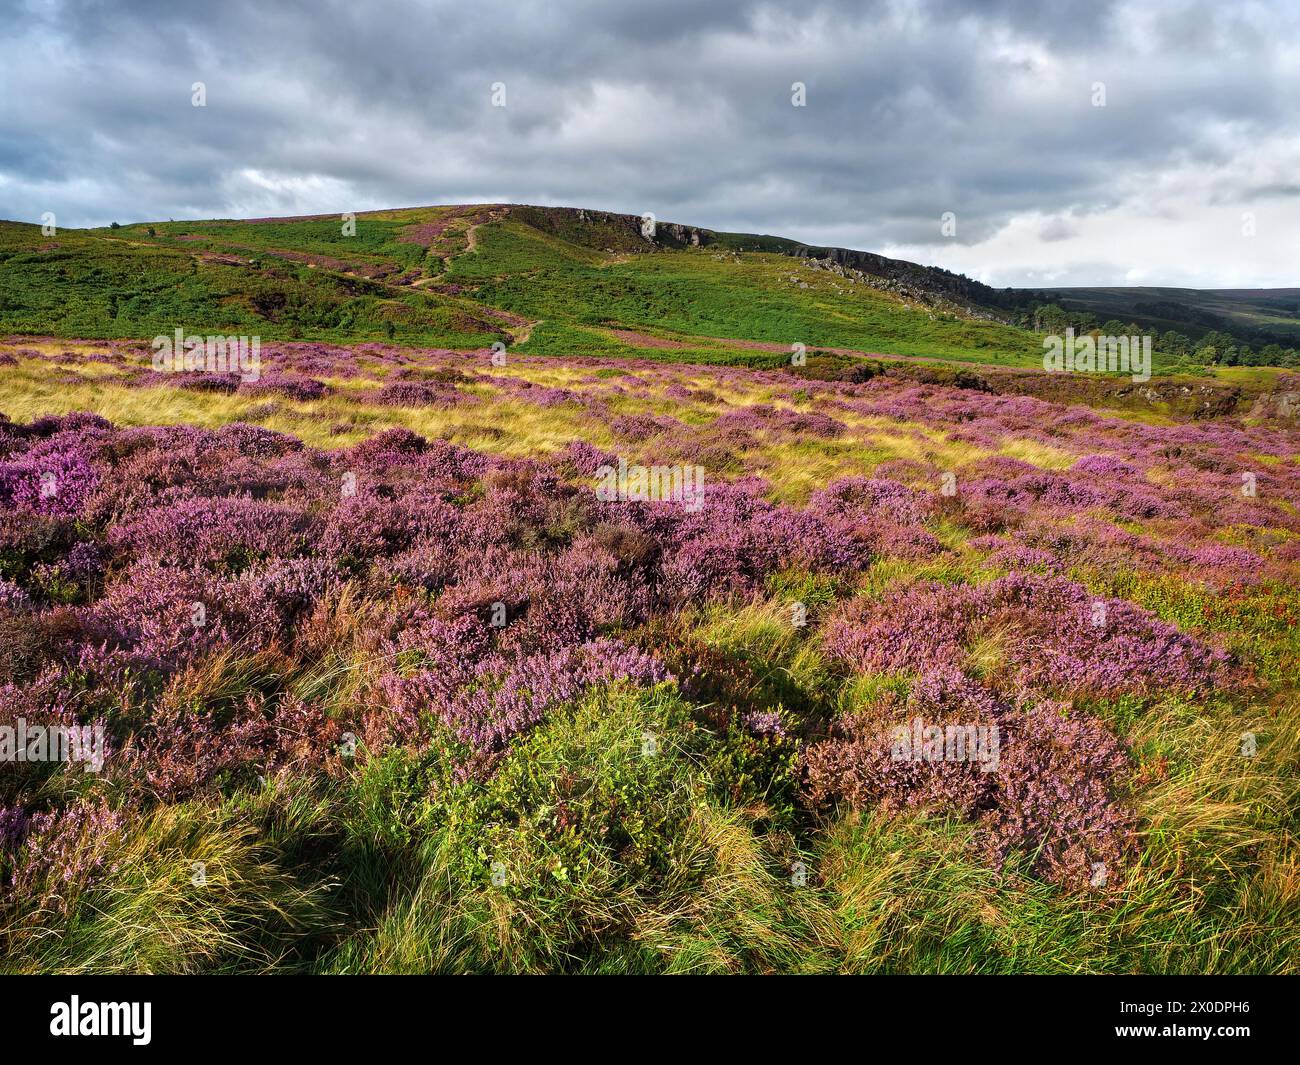 UK, West Yorkshire, Ilkley, Ilkley Moor, Heather Clad Moorland looking towards Ilkley Crags. Stock Photo